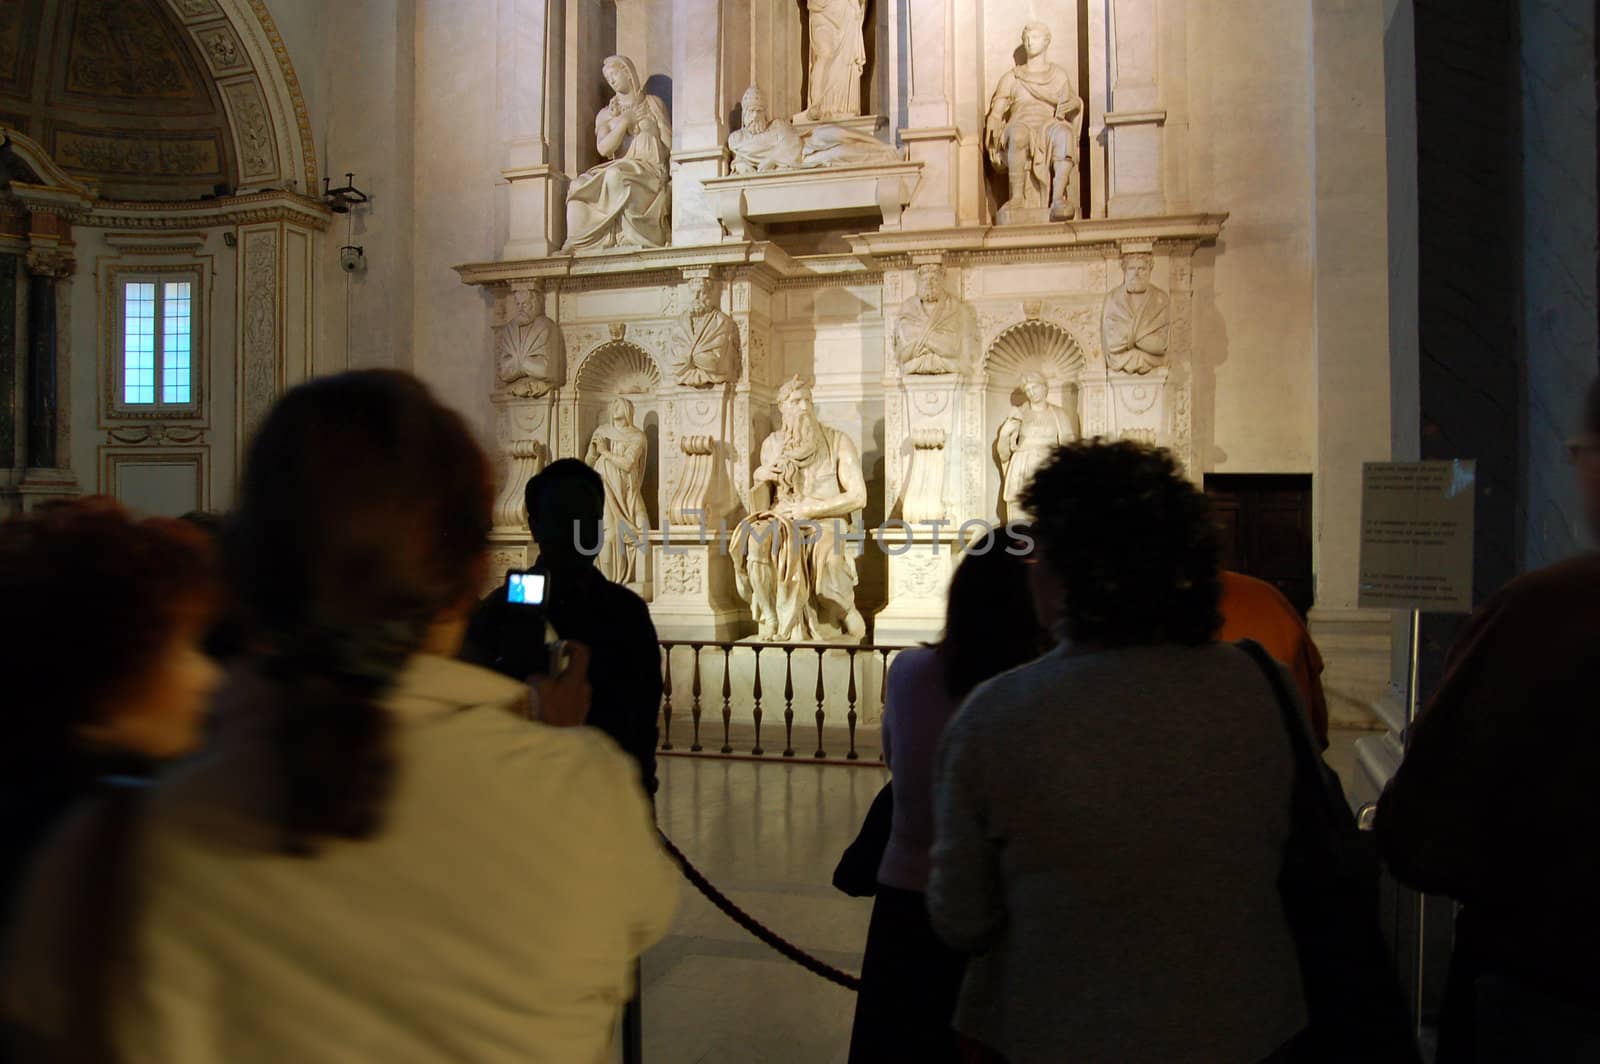 Tourist in San Pietro in Vincoli - Michelangelo's Moses - Rome, Italy